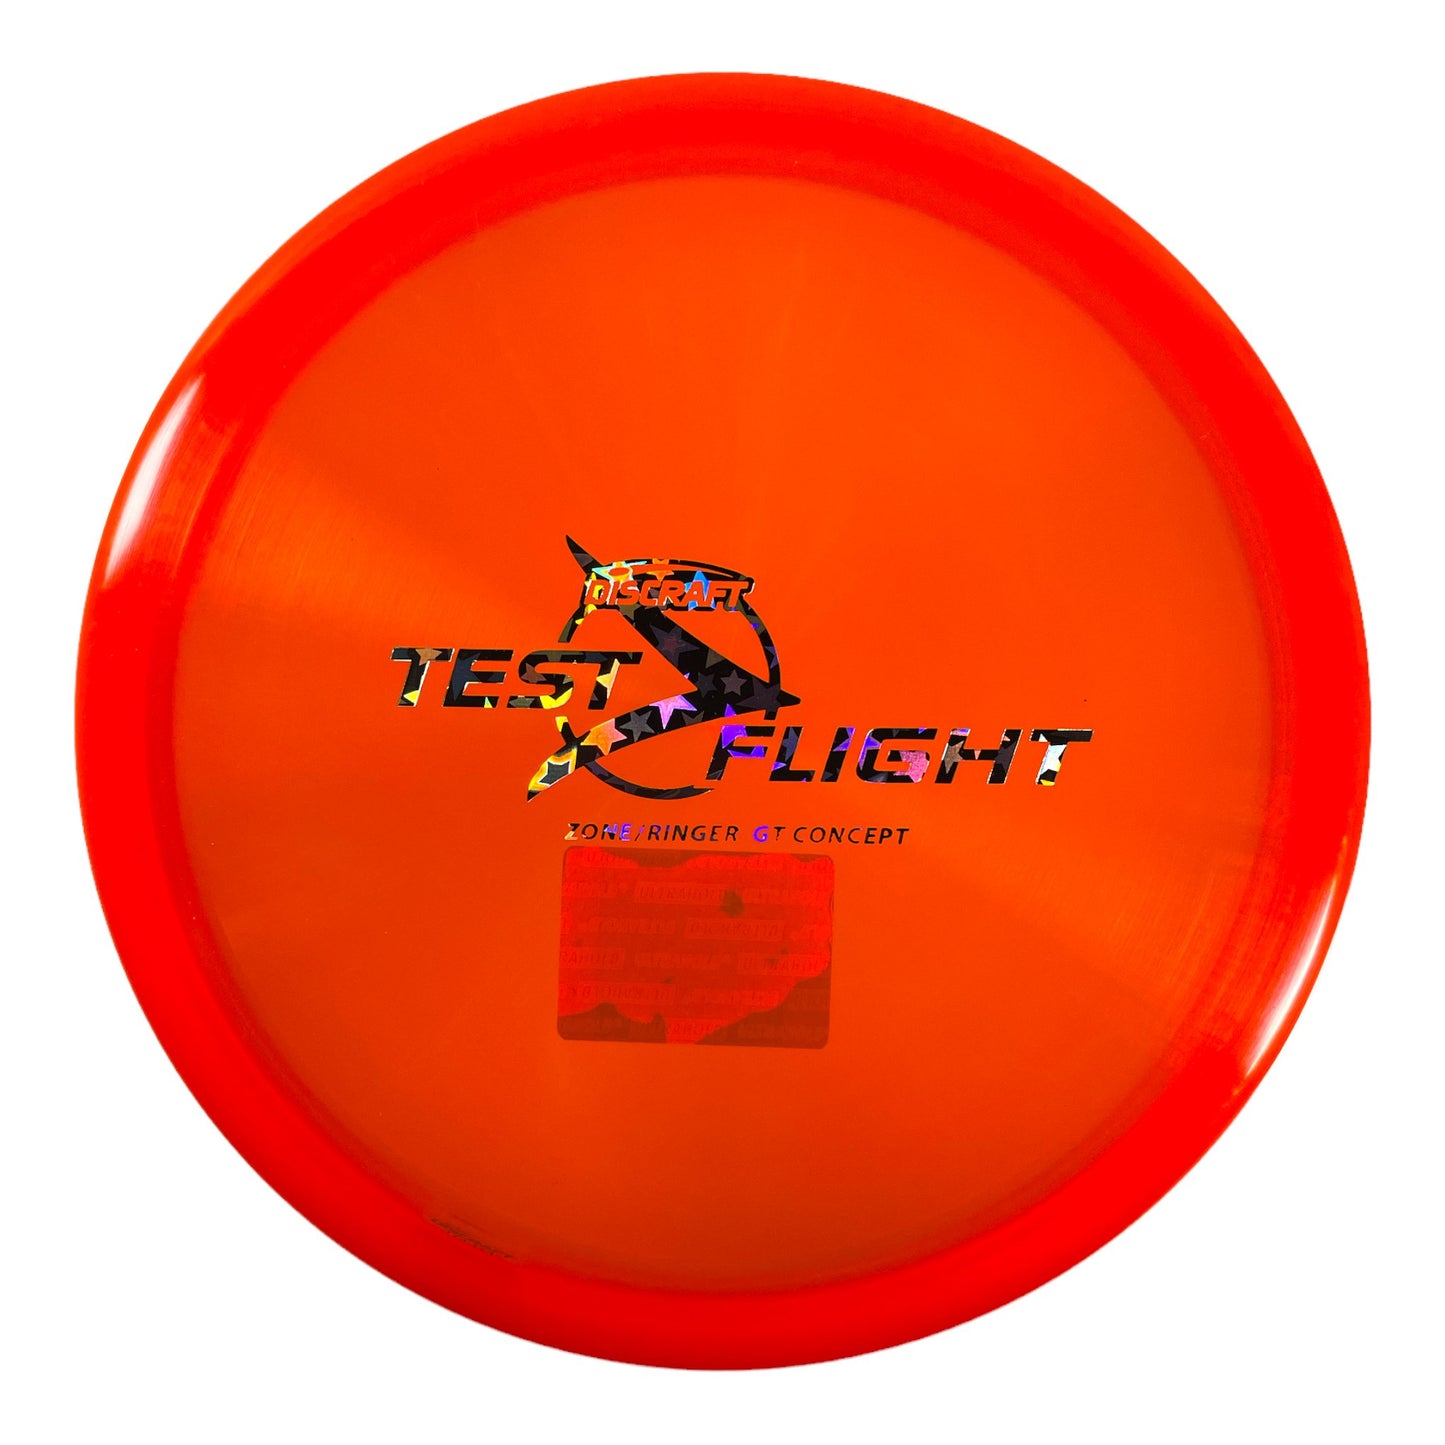 Discraft Zone GT Battle Pack | Orange (Ringer) / Red (Banger) 170-174g Disc Golf